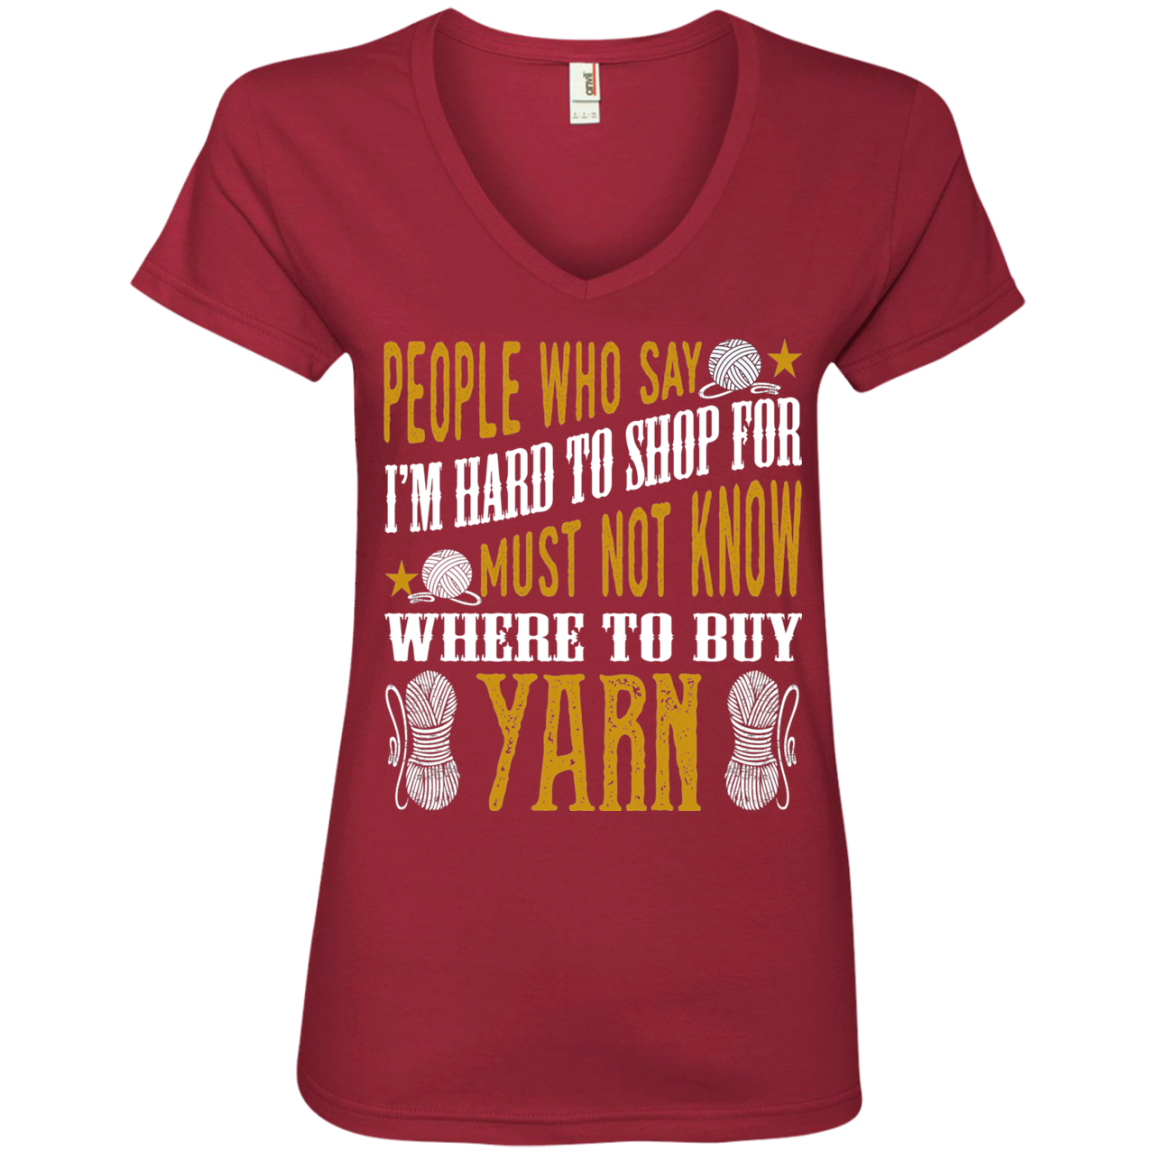 Where to Buy Yarn Ladies V-Neck T-Shirt